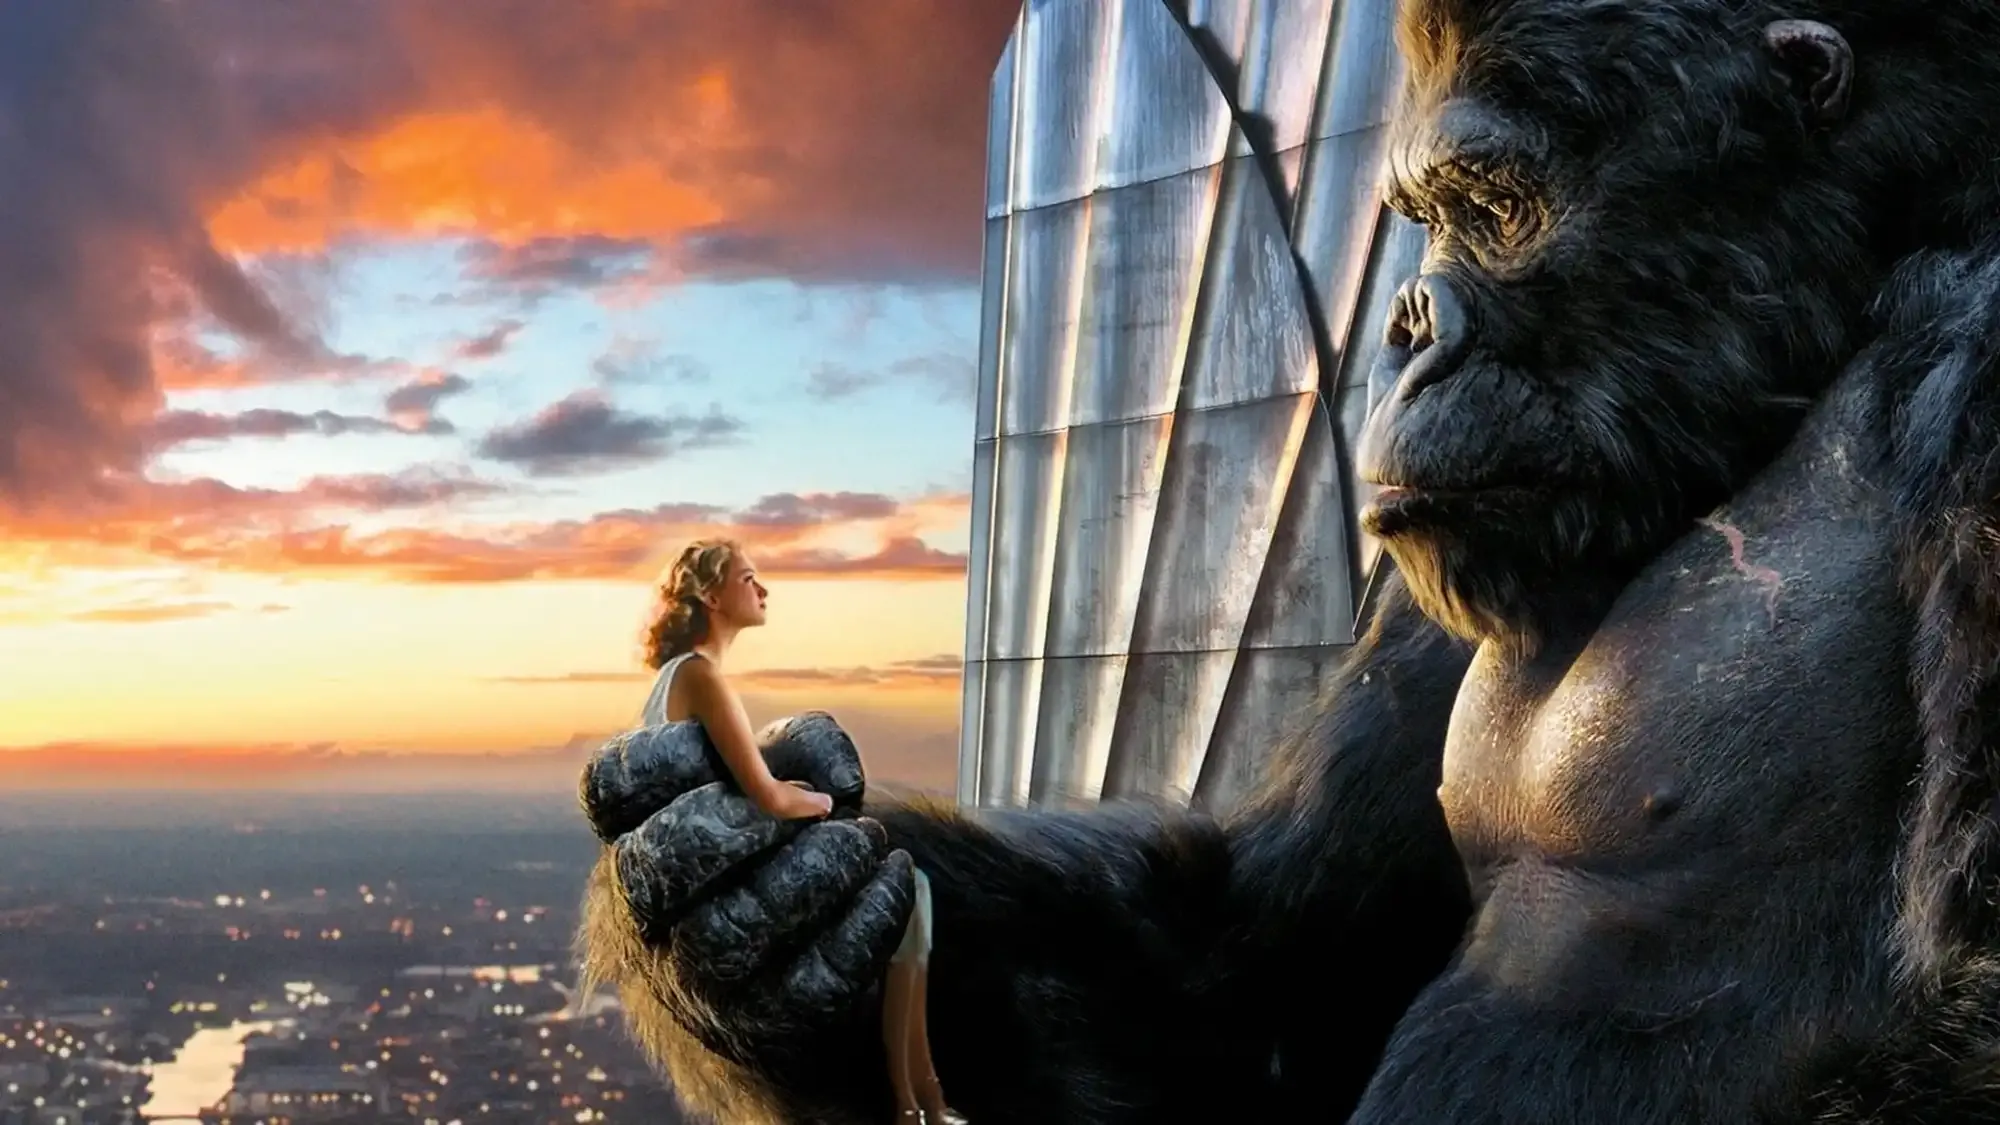 King Kong movie review